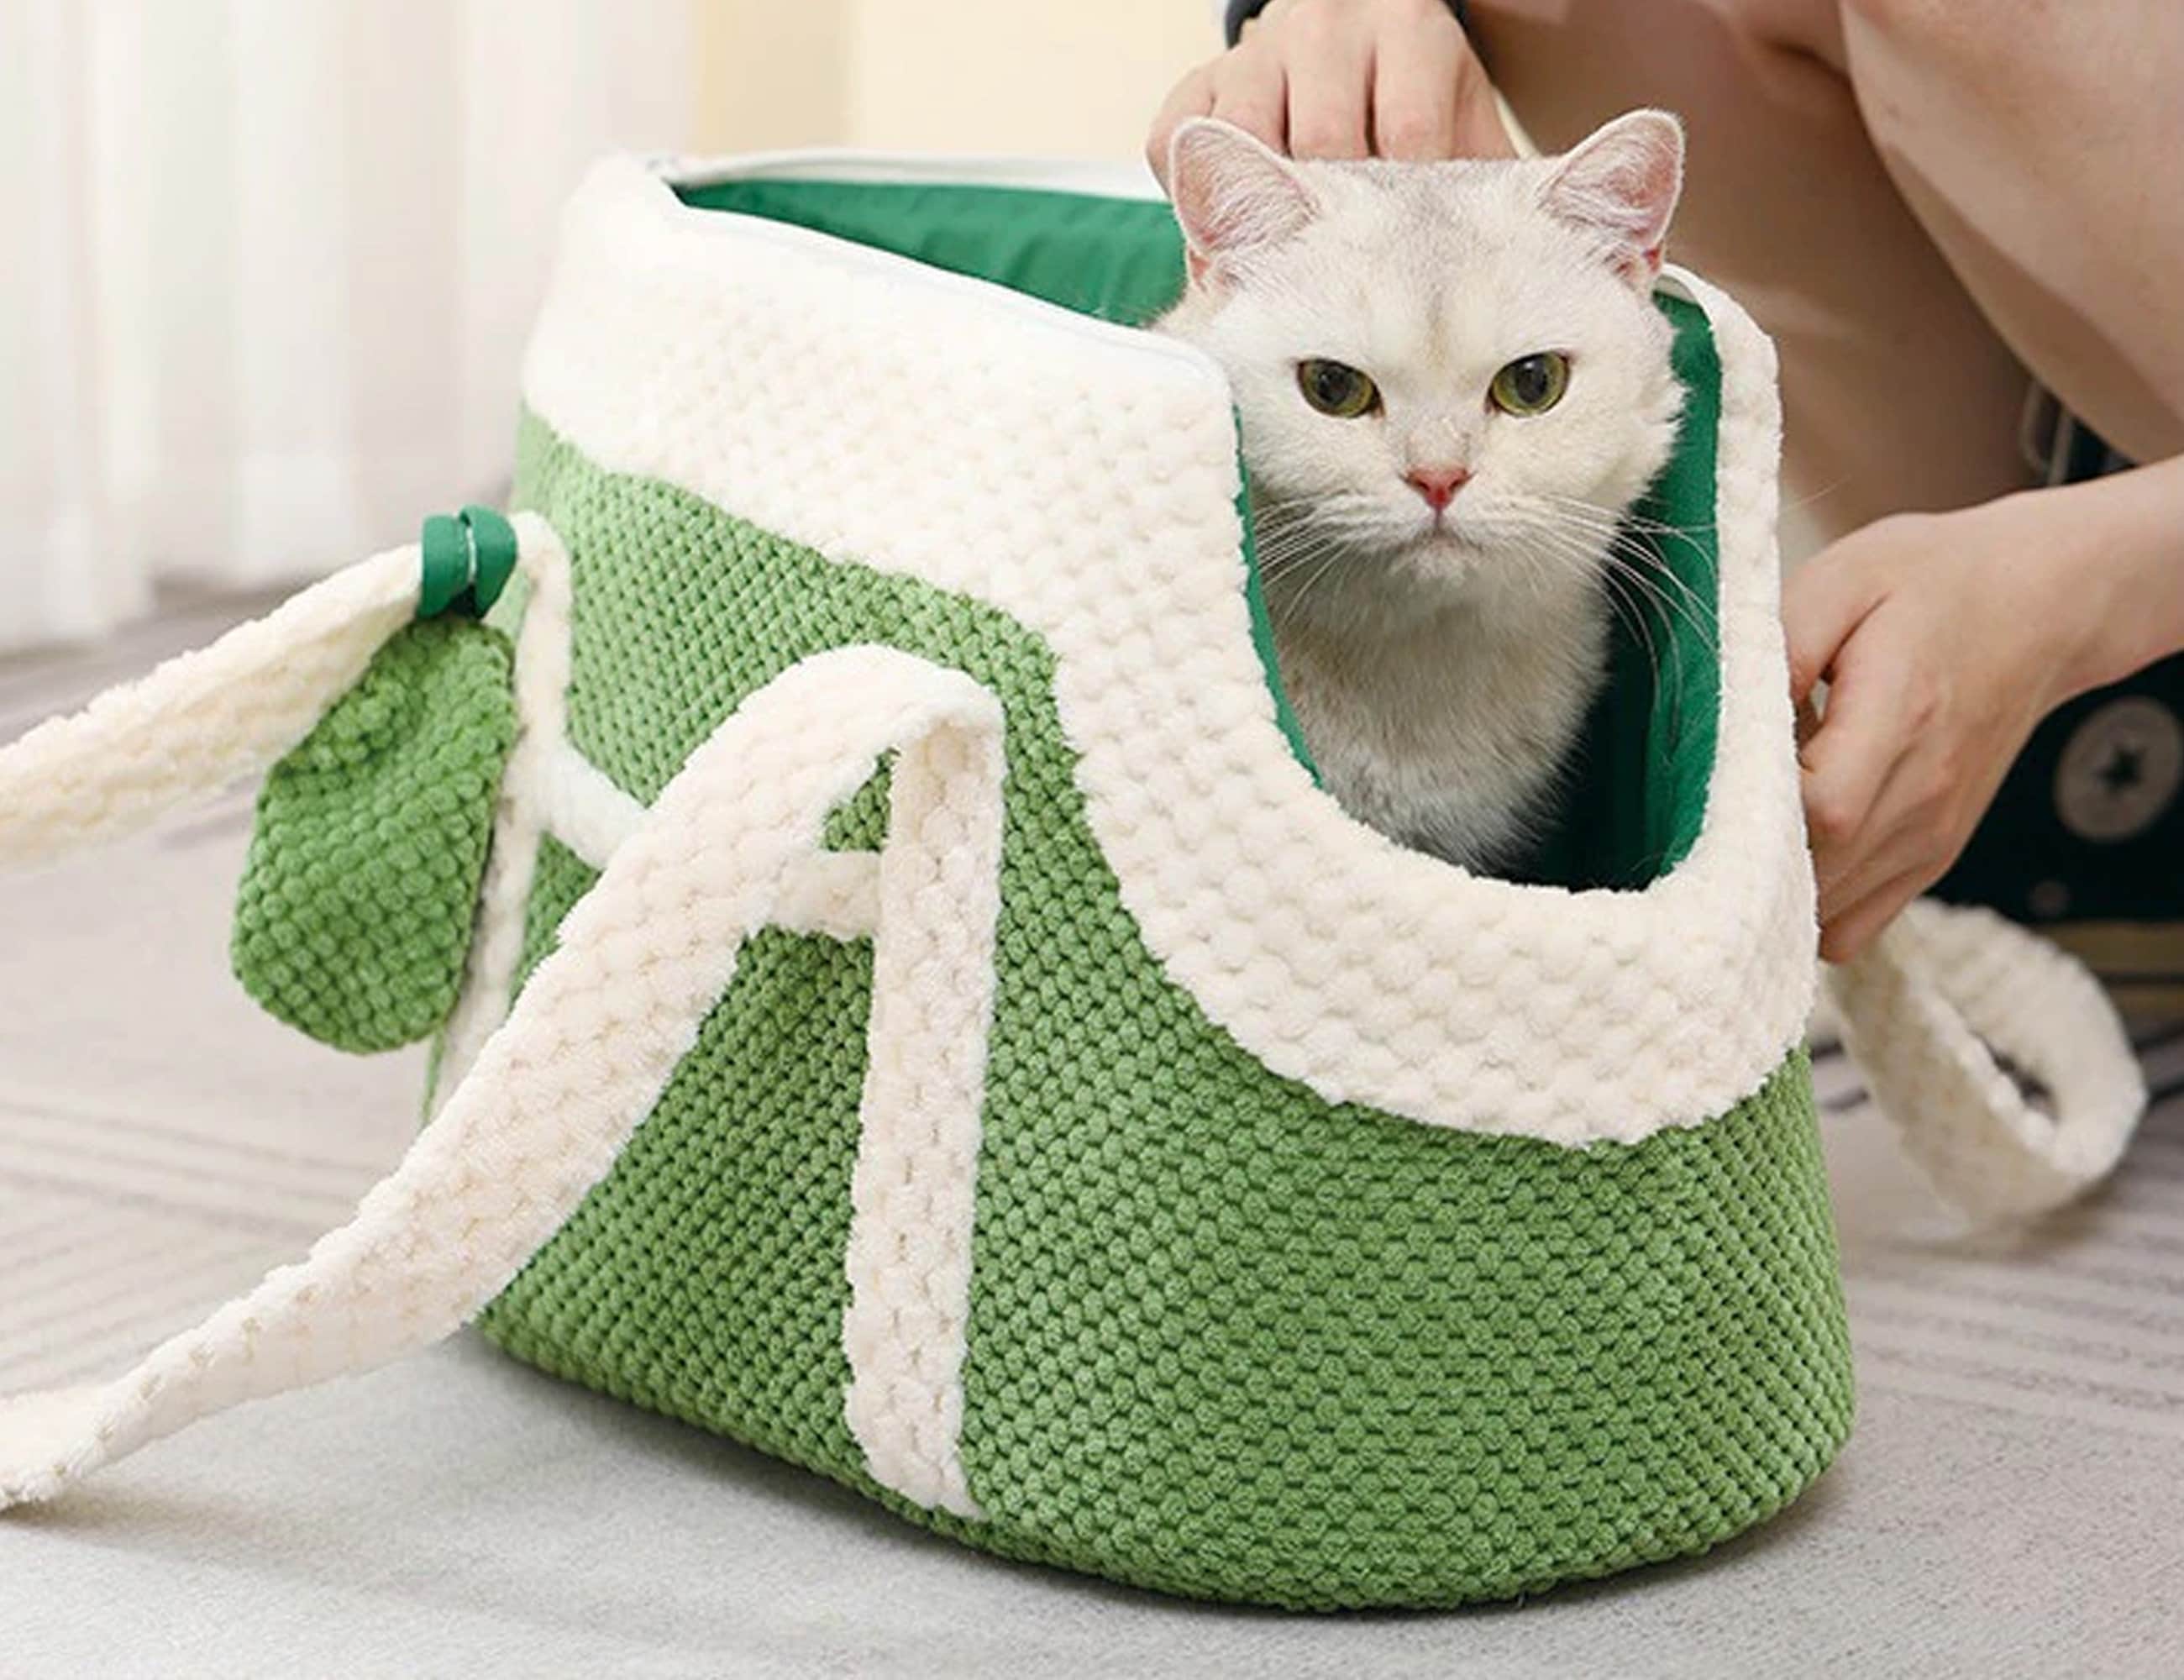 Best Designed Designer Cat Themed Bags and Purses  Crazy Cat Shop  Cat bag  Cat shop Animal bag